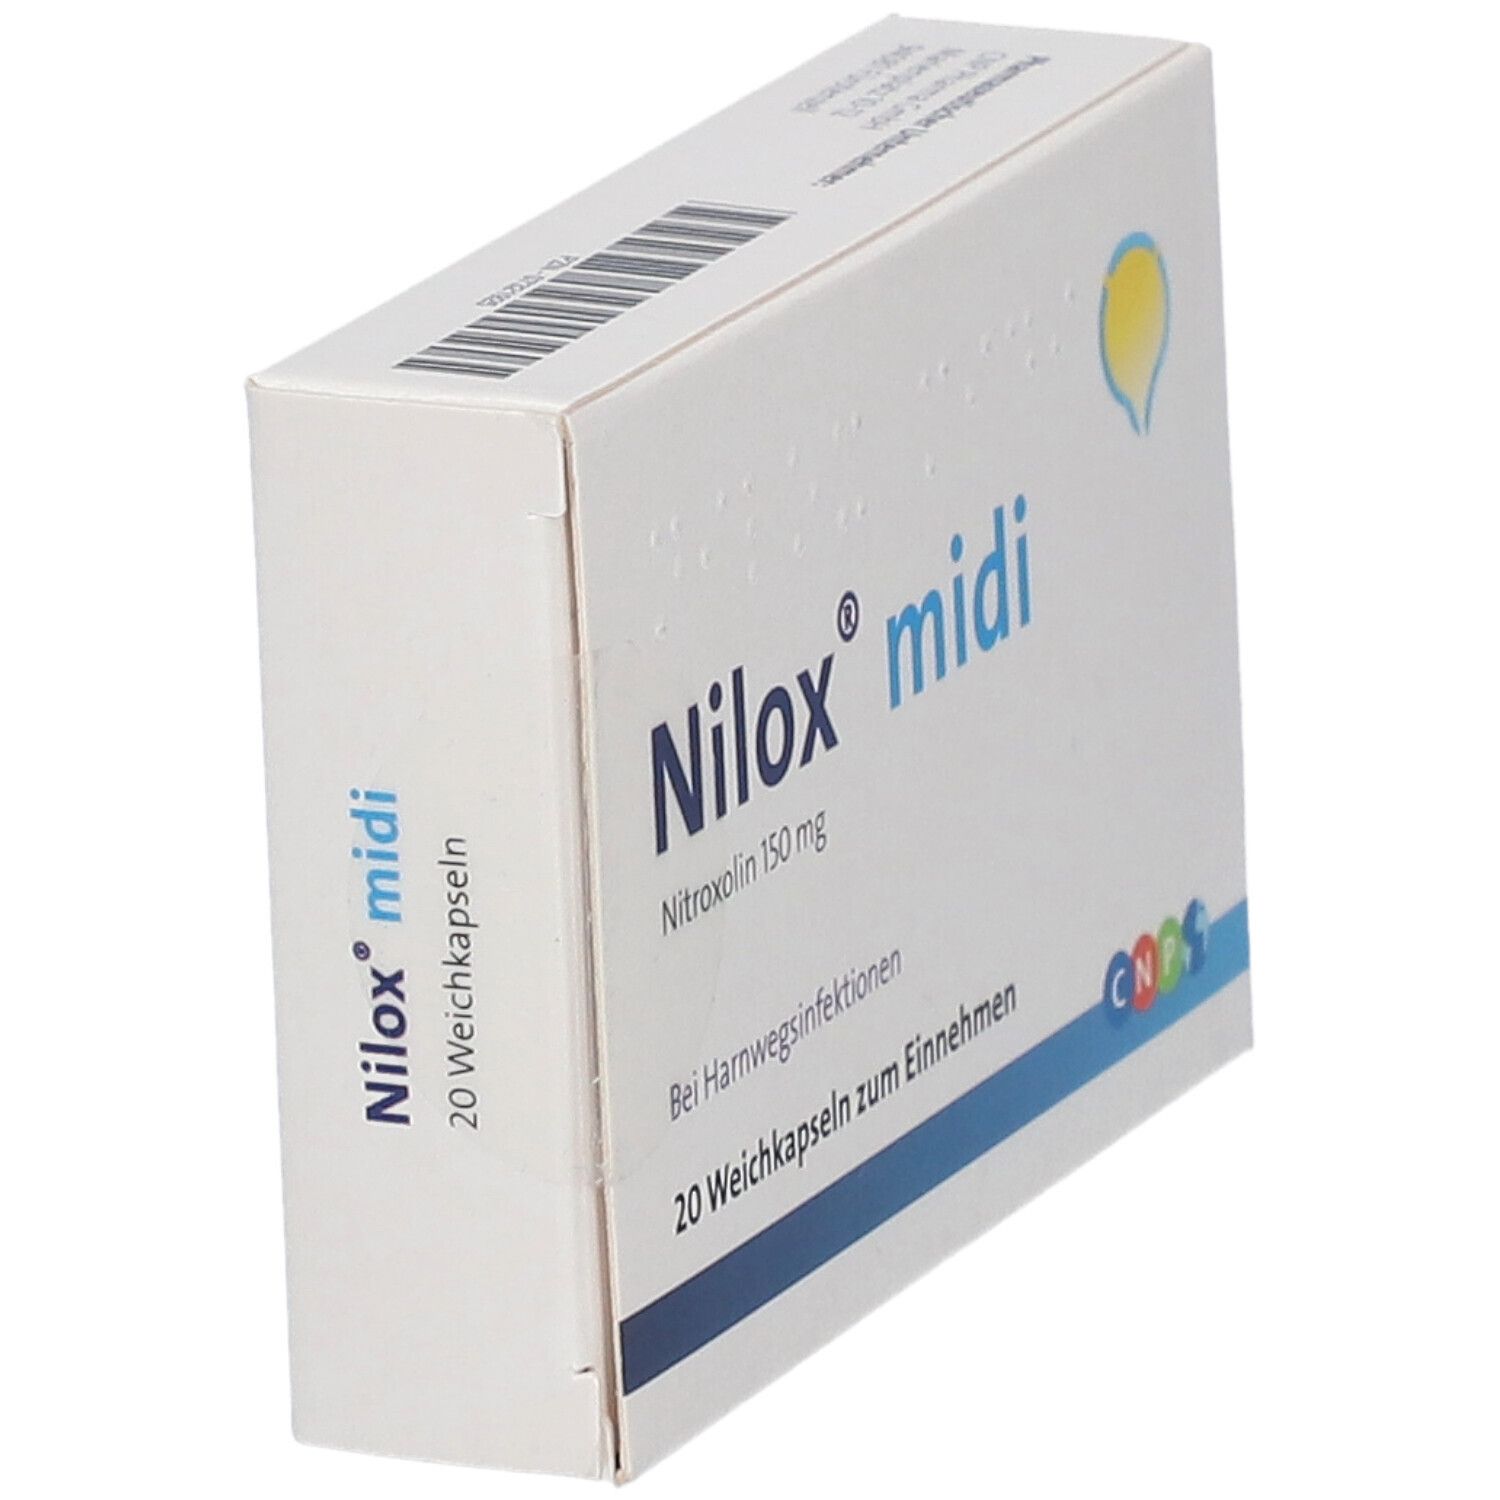 Nilox® midi 150 mg